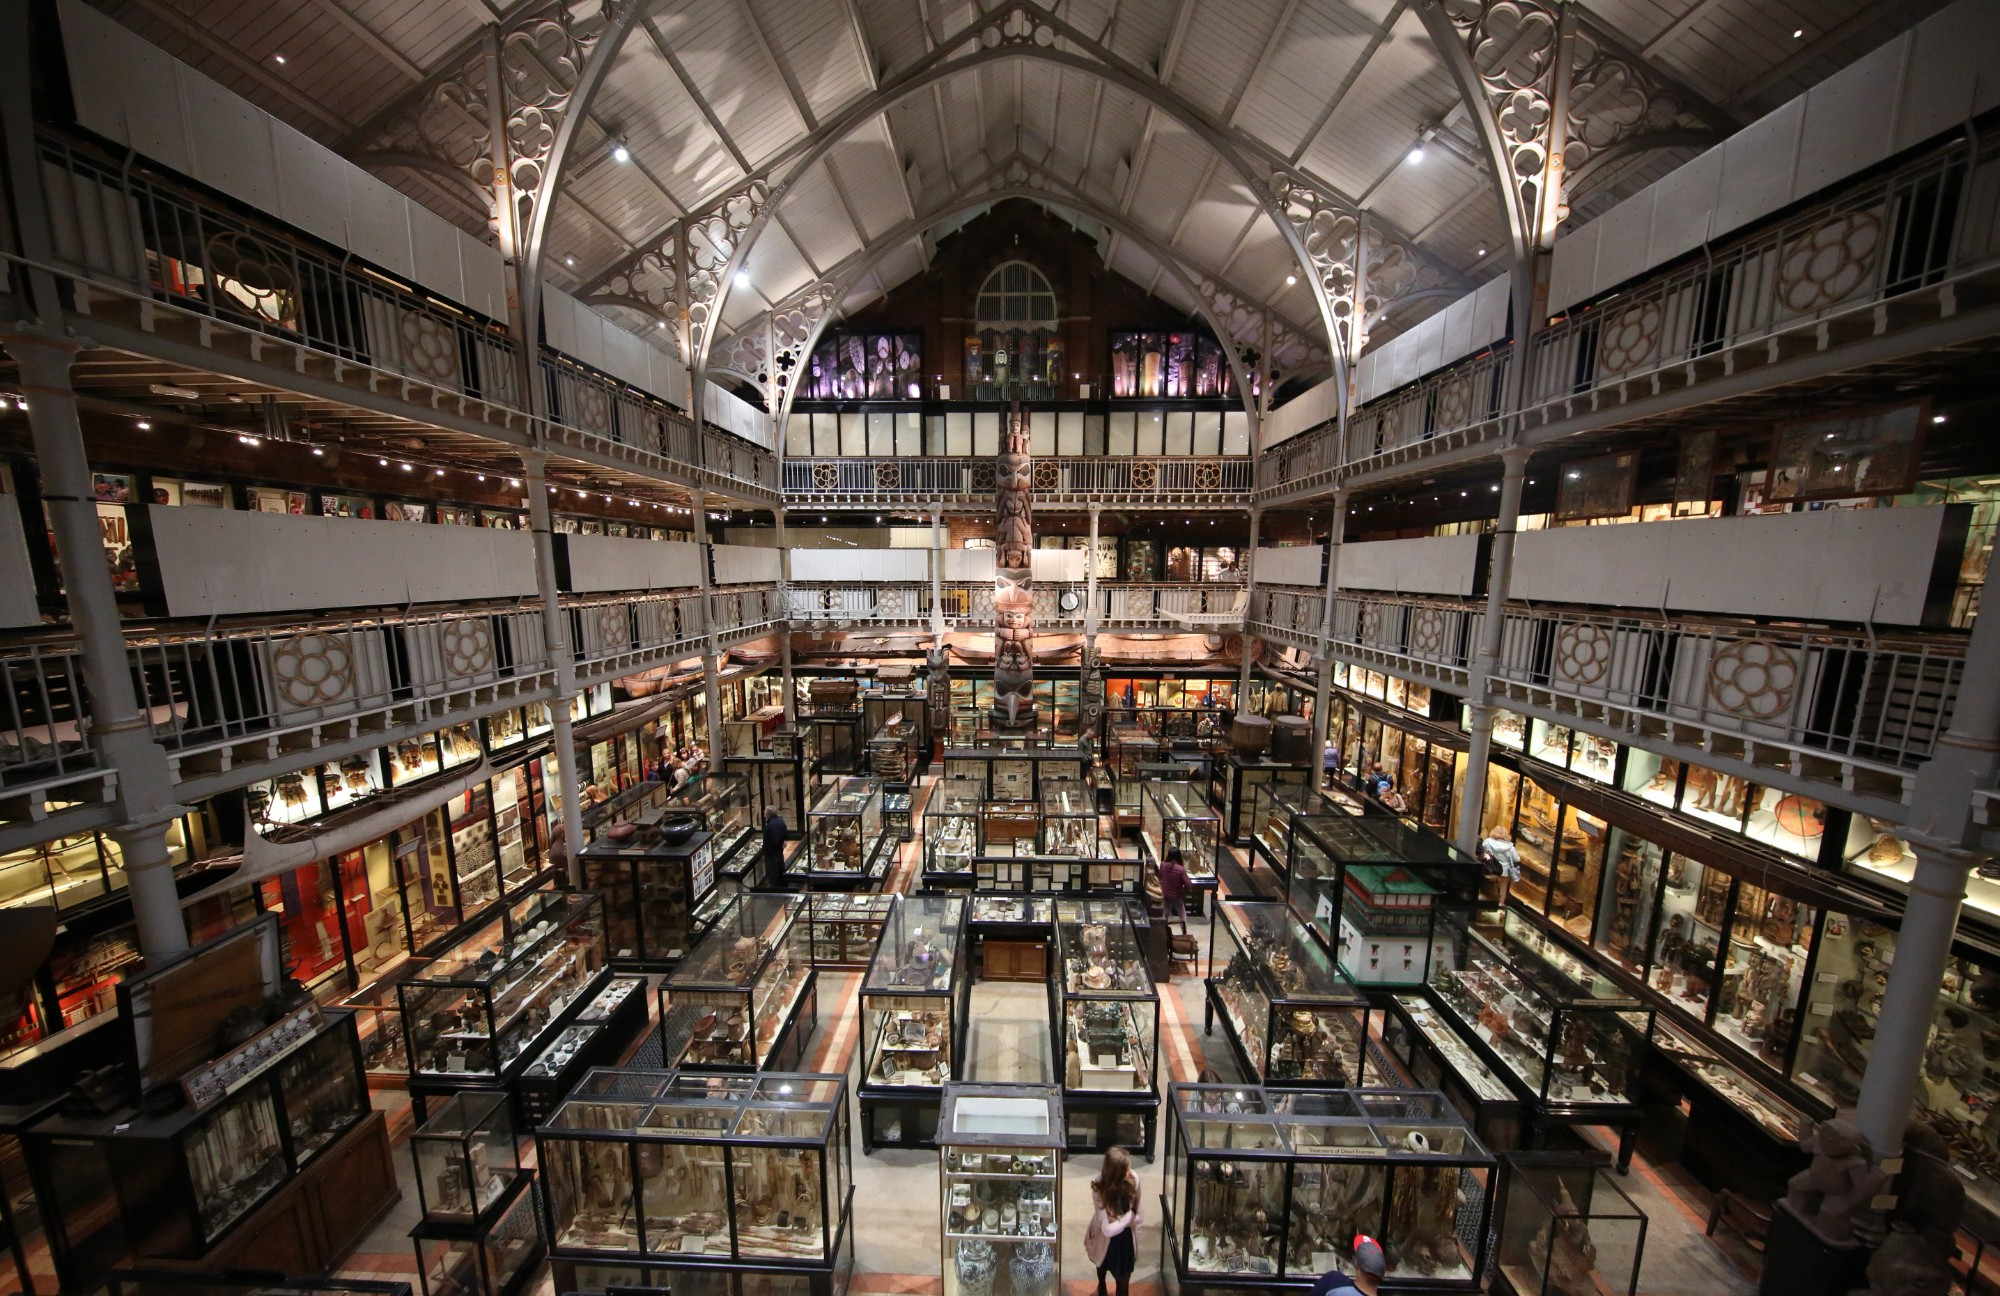 https://commons.wikimedia.org/wiki/File:Interior_of_Pitt_Rivers_Museum_2015.JPG